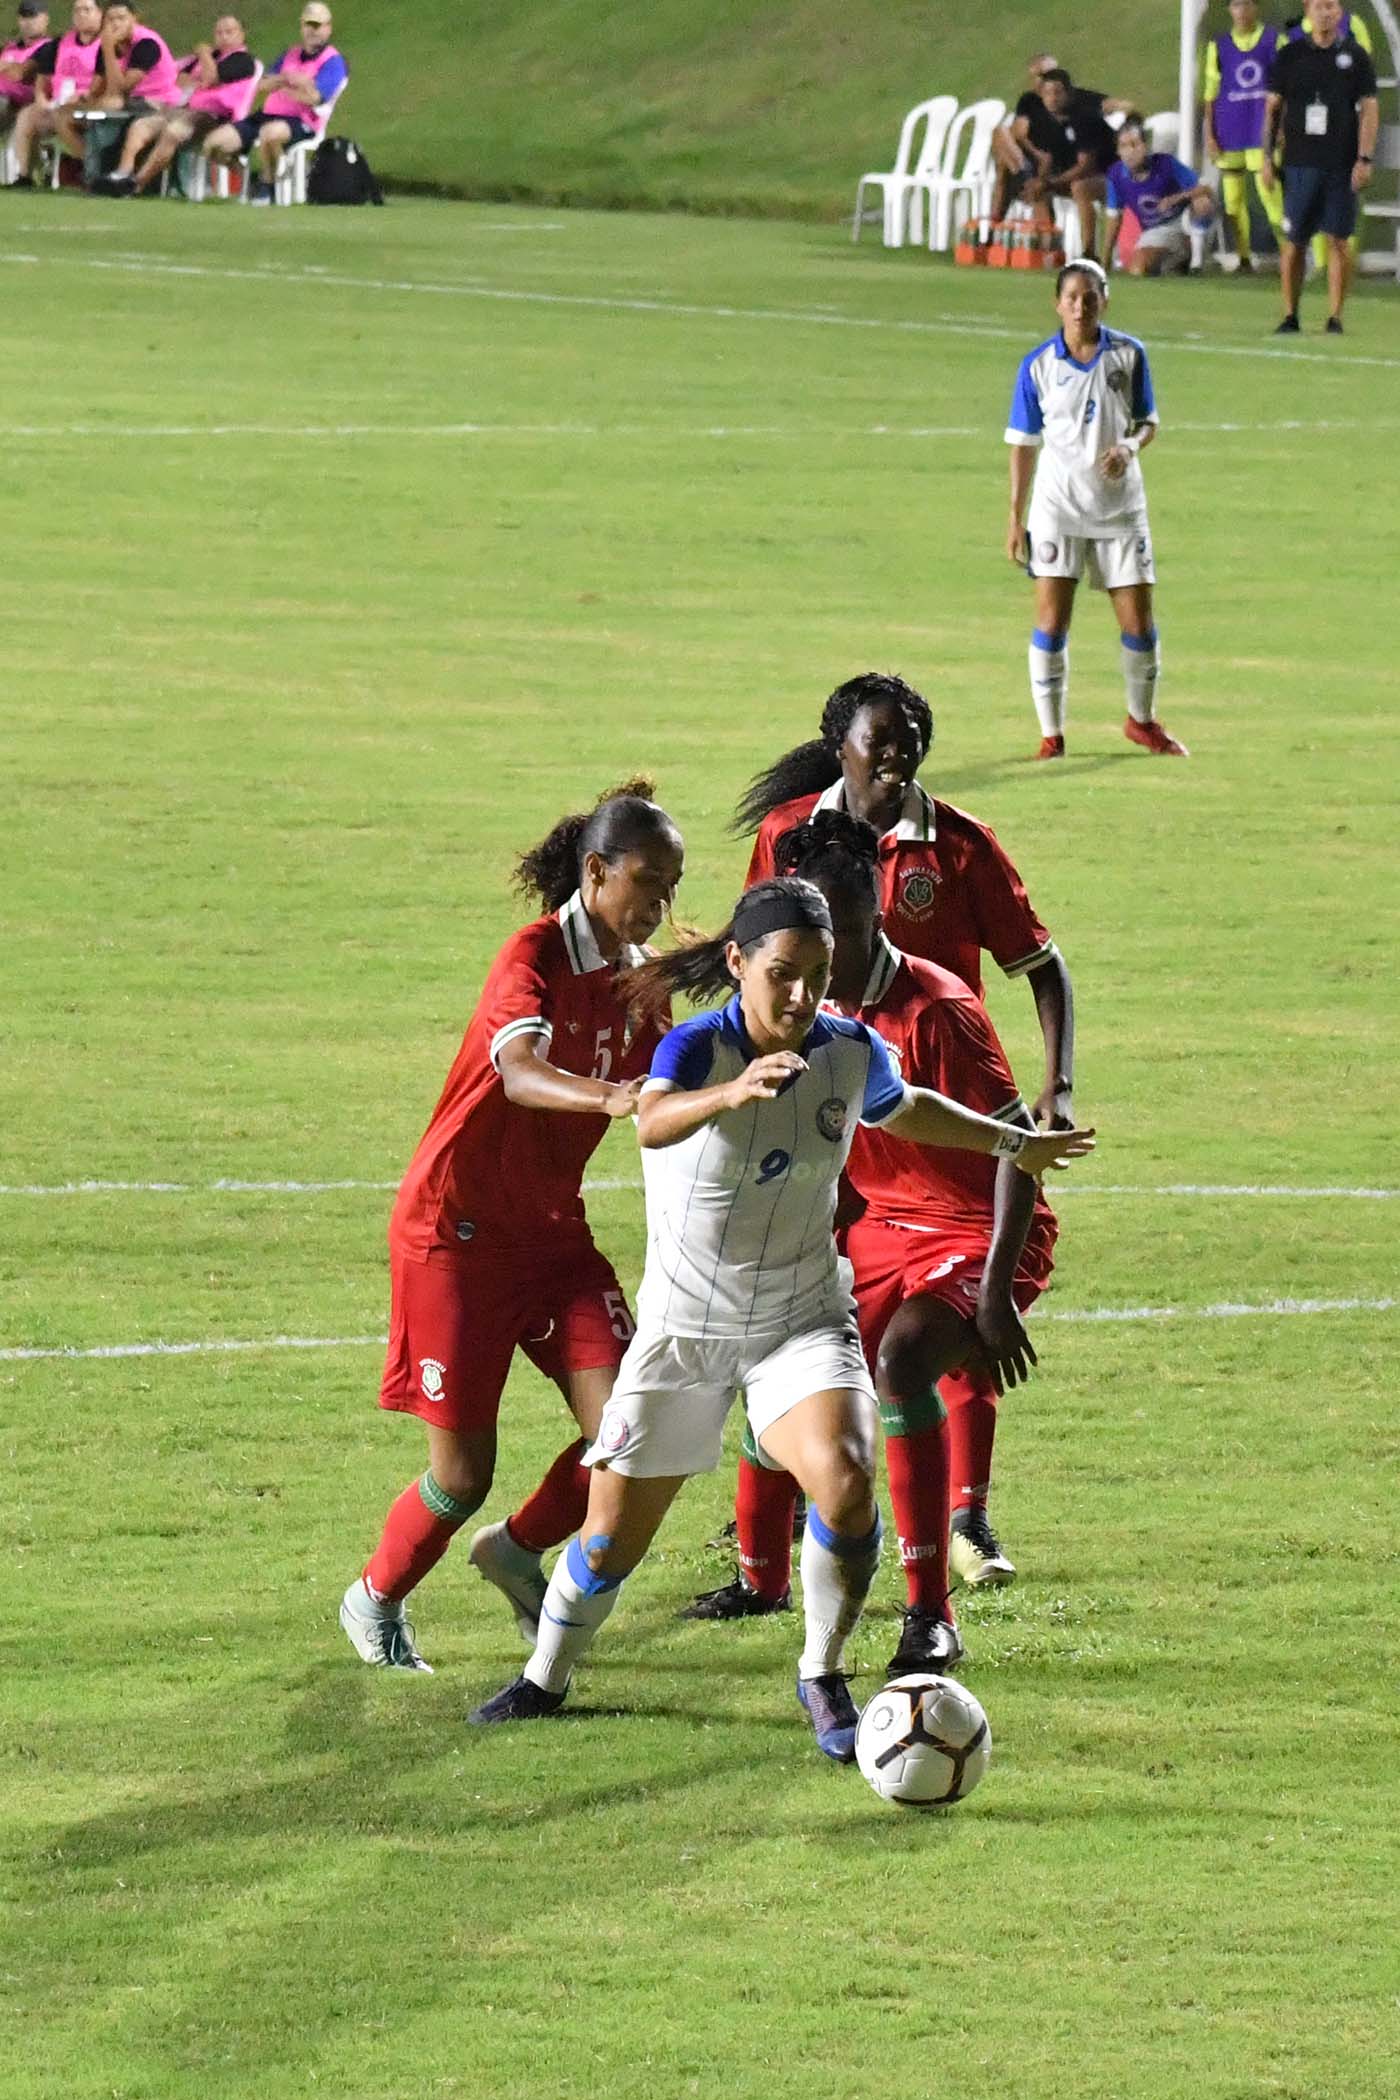 Soccer-Fem-PR-vs-Surinam-28